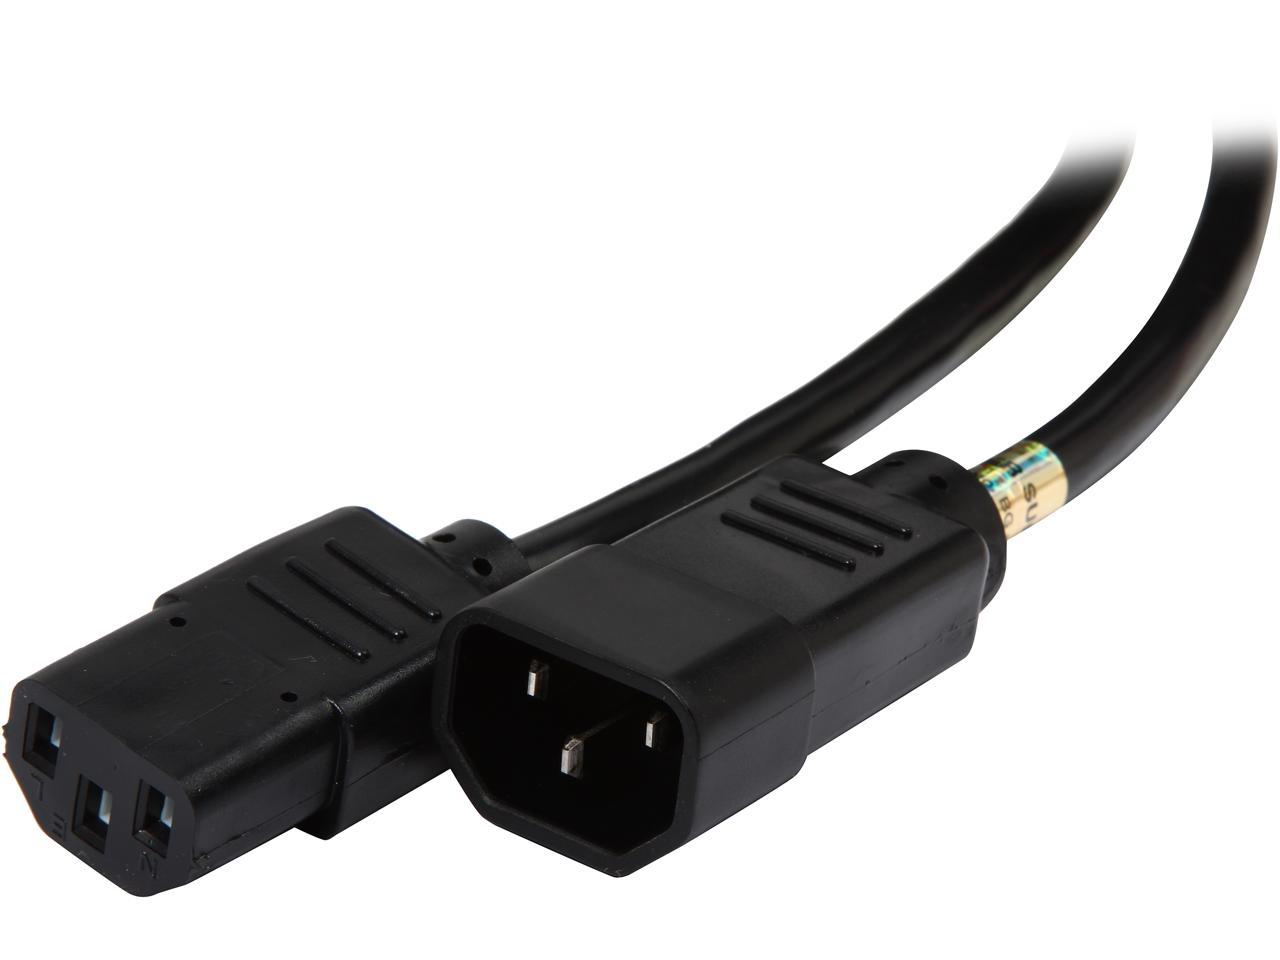 Tripp Lite Model P004-005-13A 5 ft. Black 16AWG SJT, 13A, 100-250V IEC-320-C14 to IEC-320-C13 Power Cord Male to Female